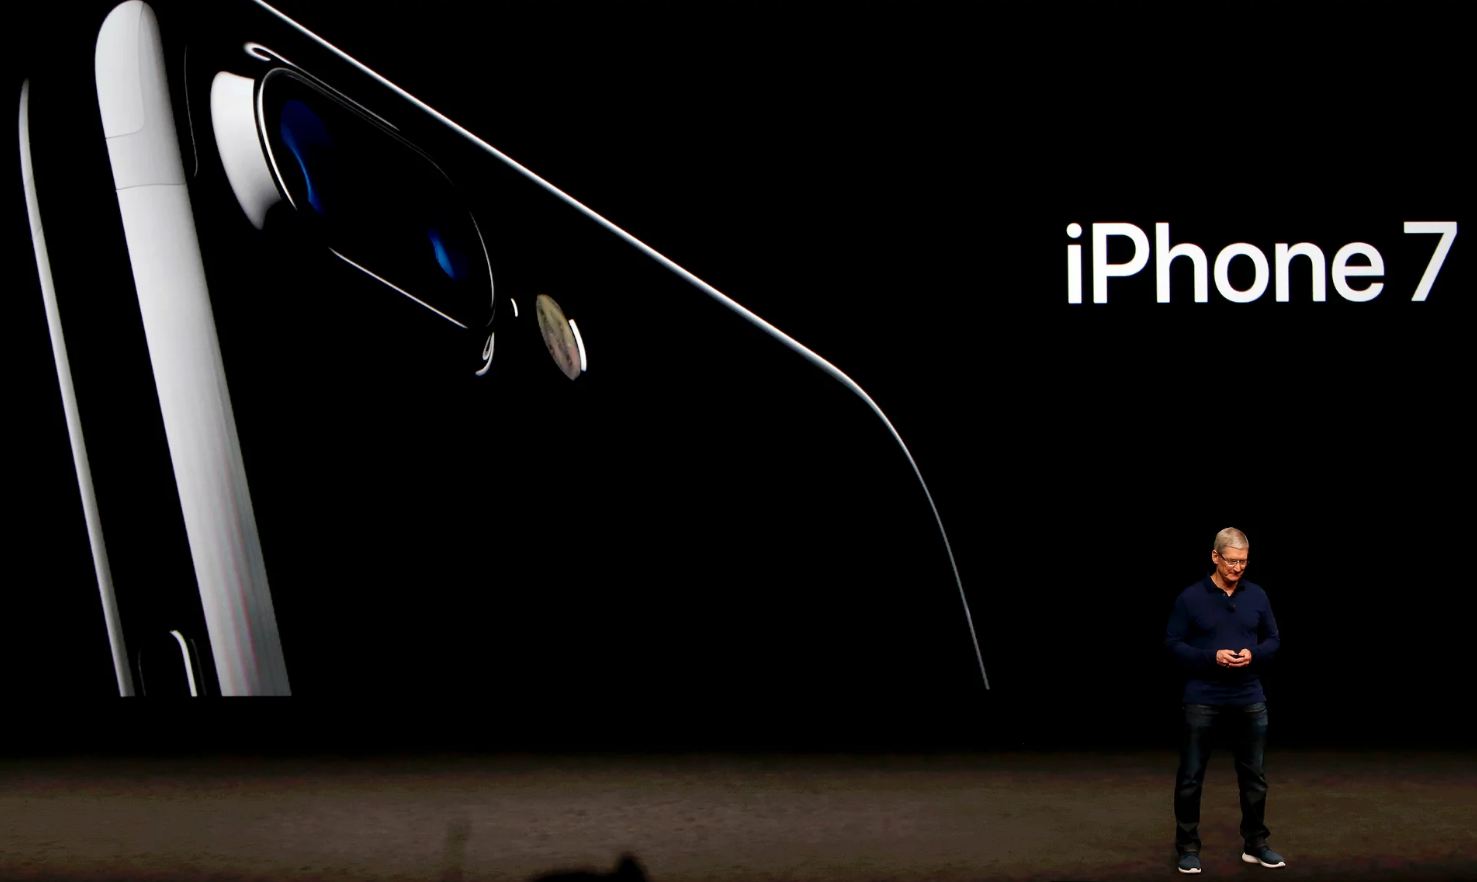 apple-iphone-7-event-launch-techonol-prajwal